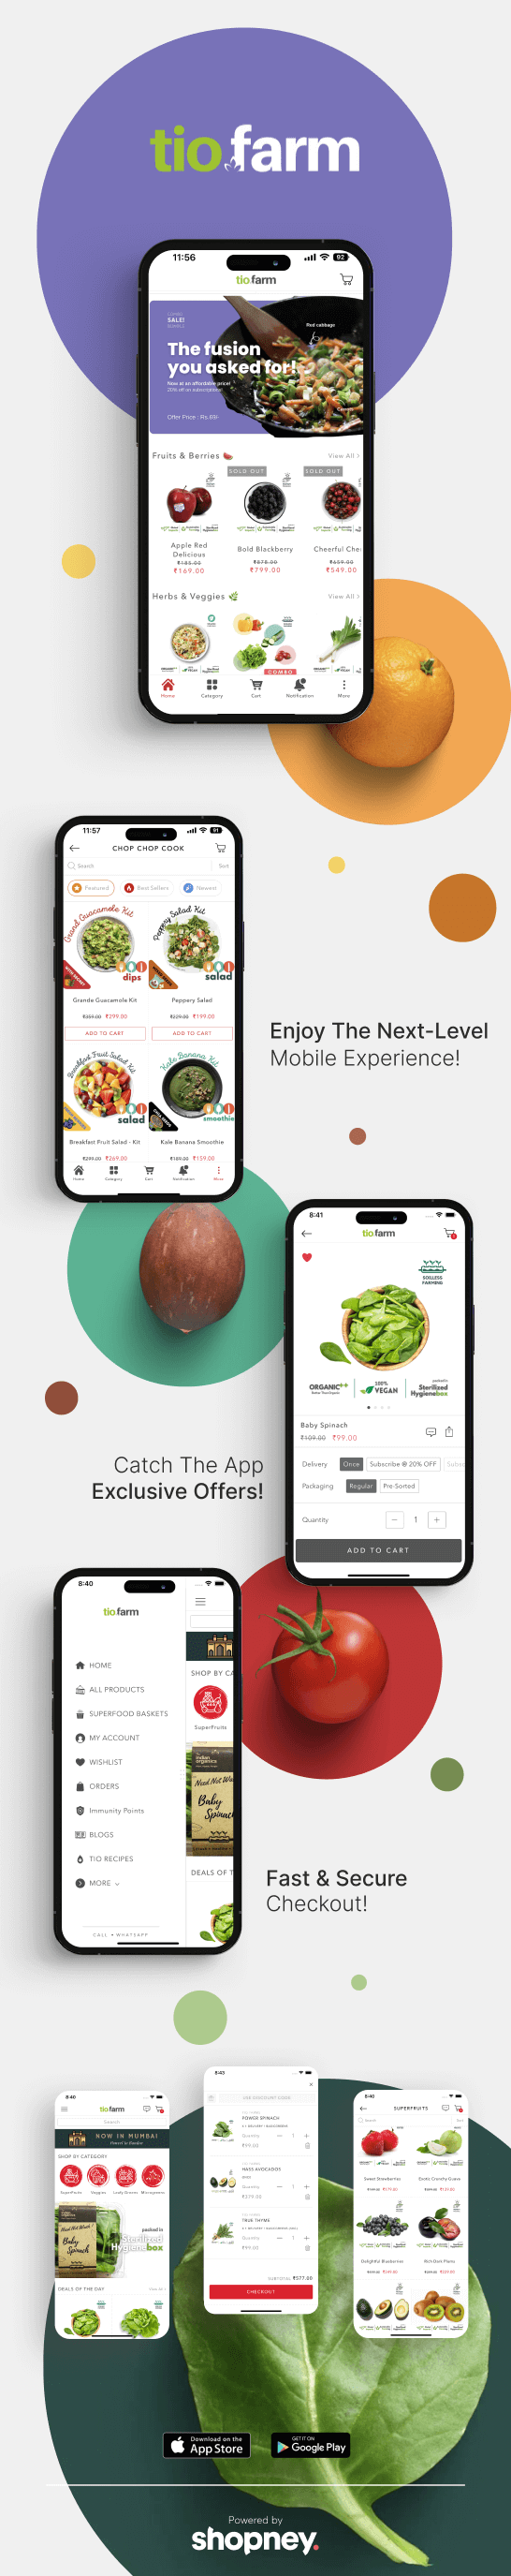 the mobile app design of Tio Farms app